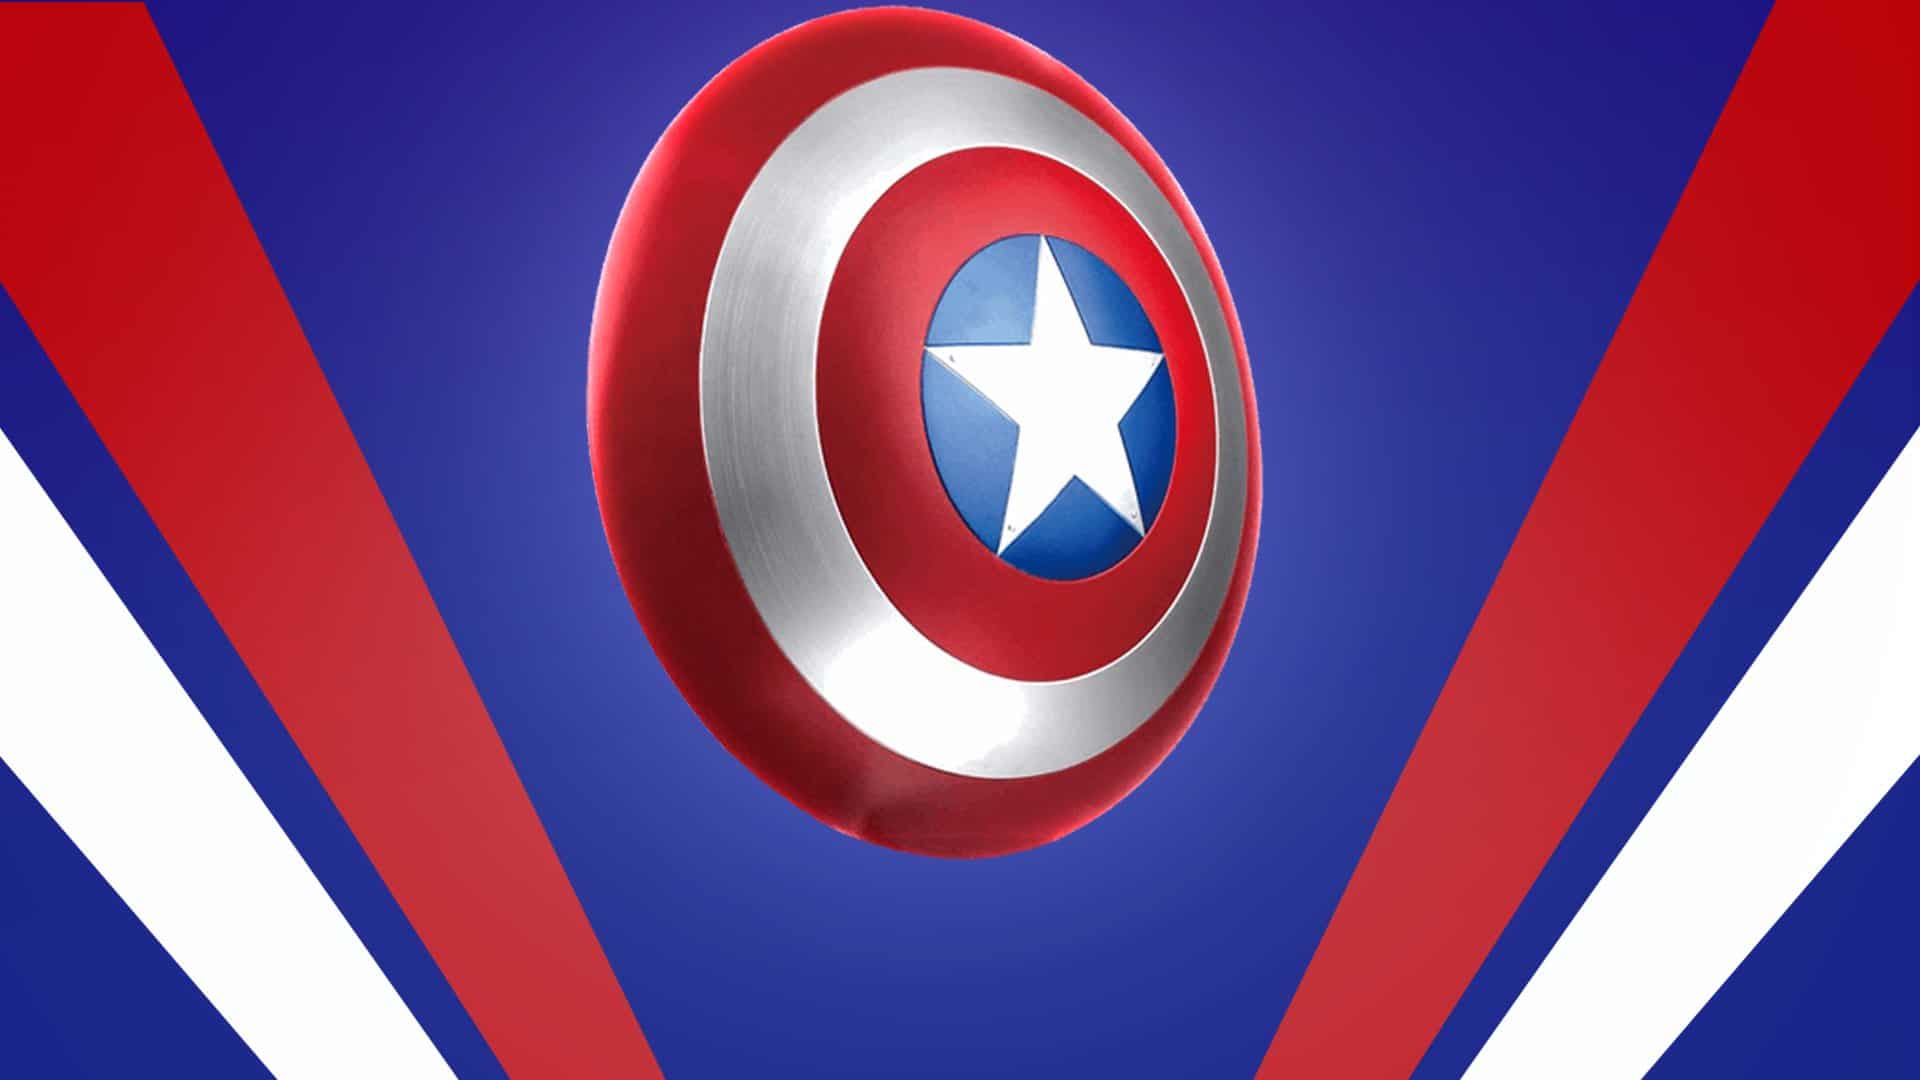 Captain America Item Shop Background